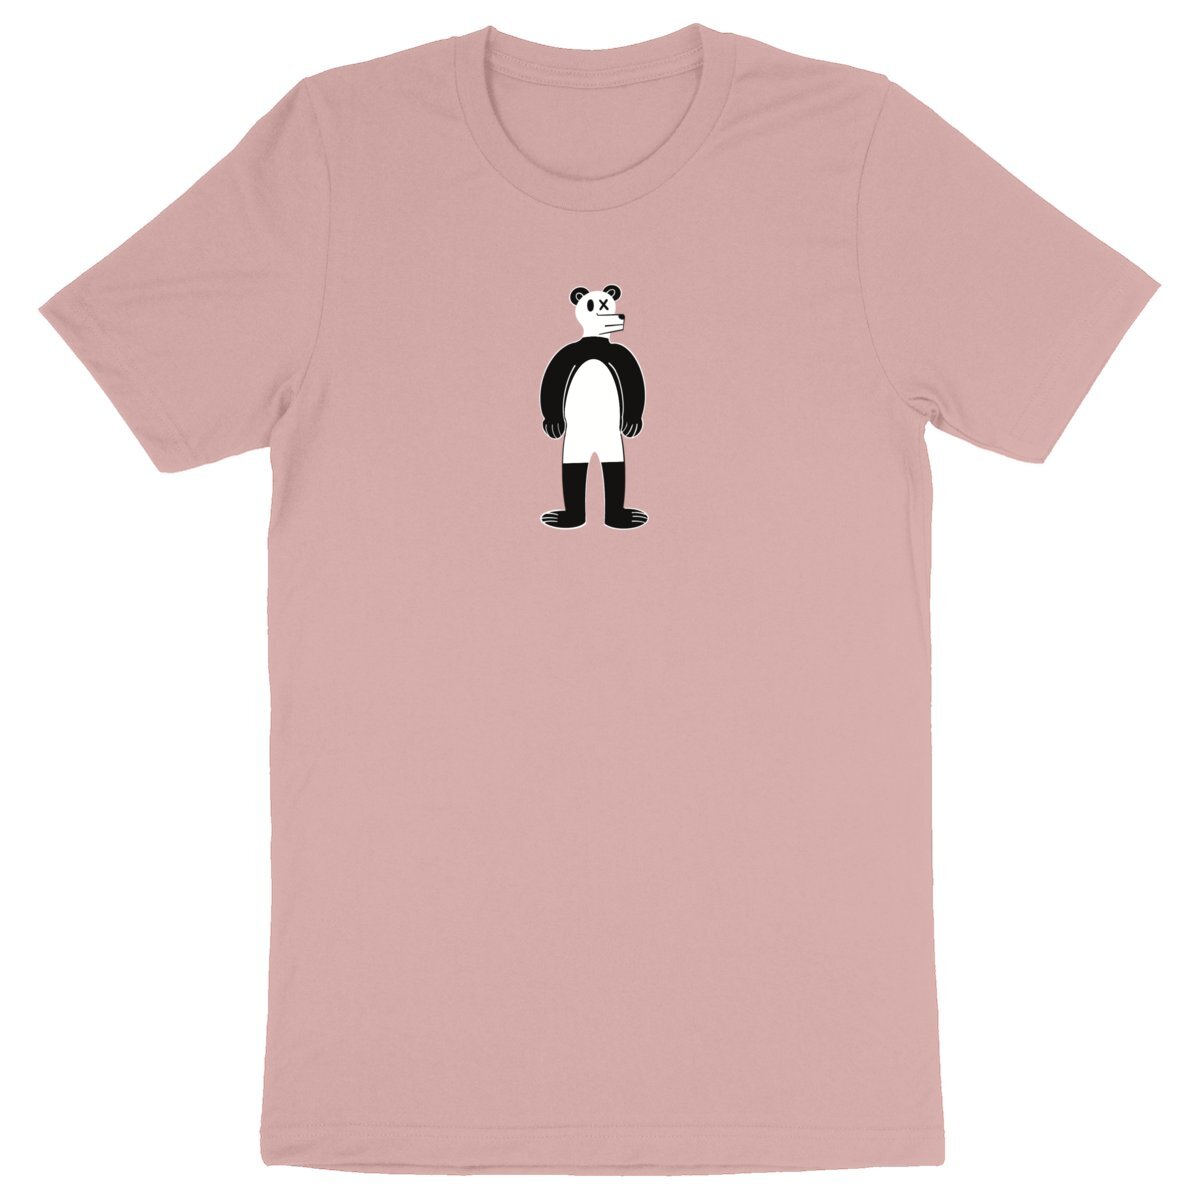 Panda Bear Graphic Tee